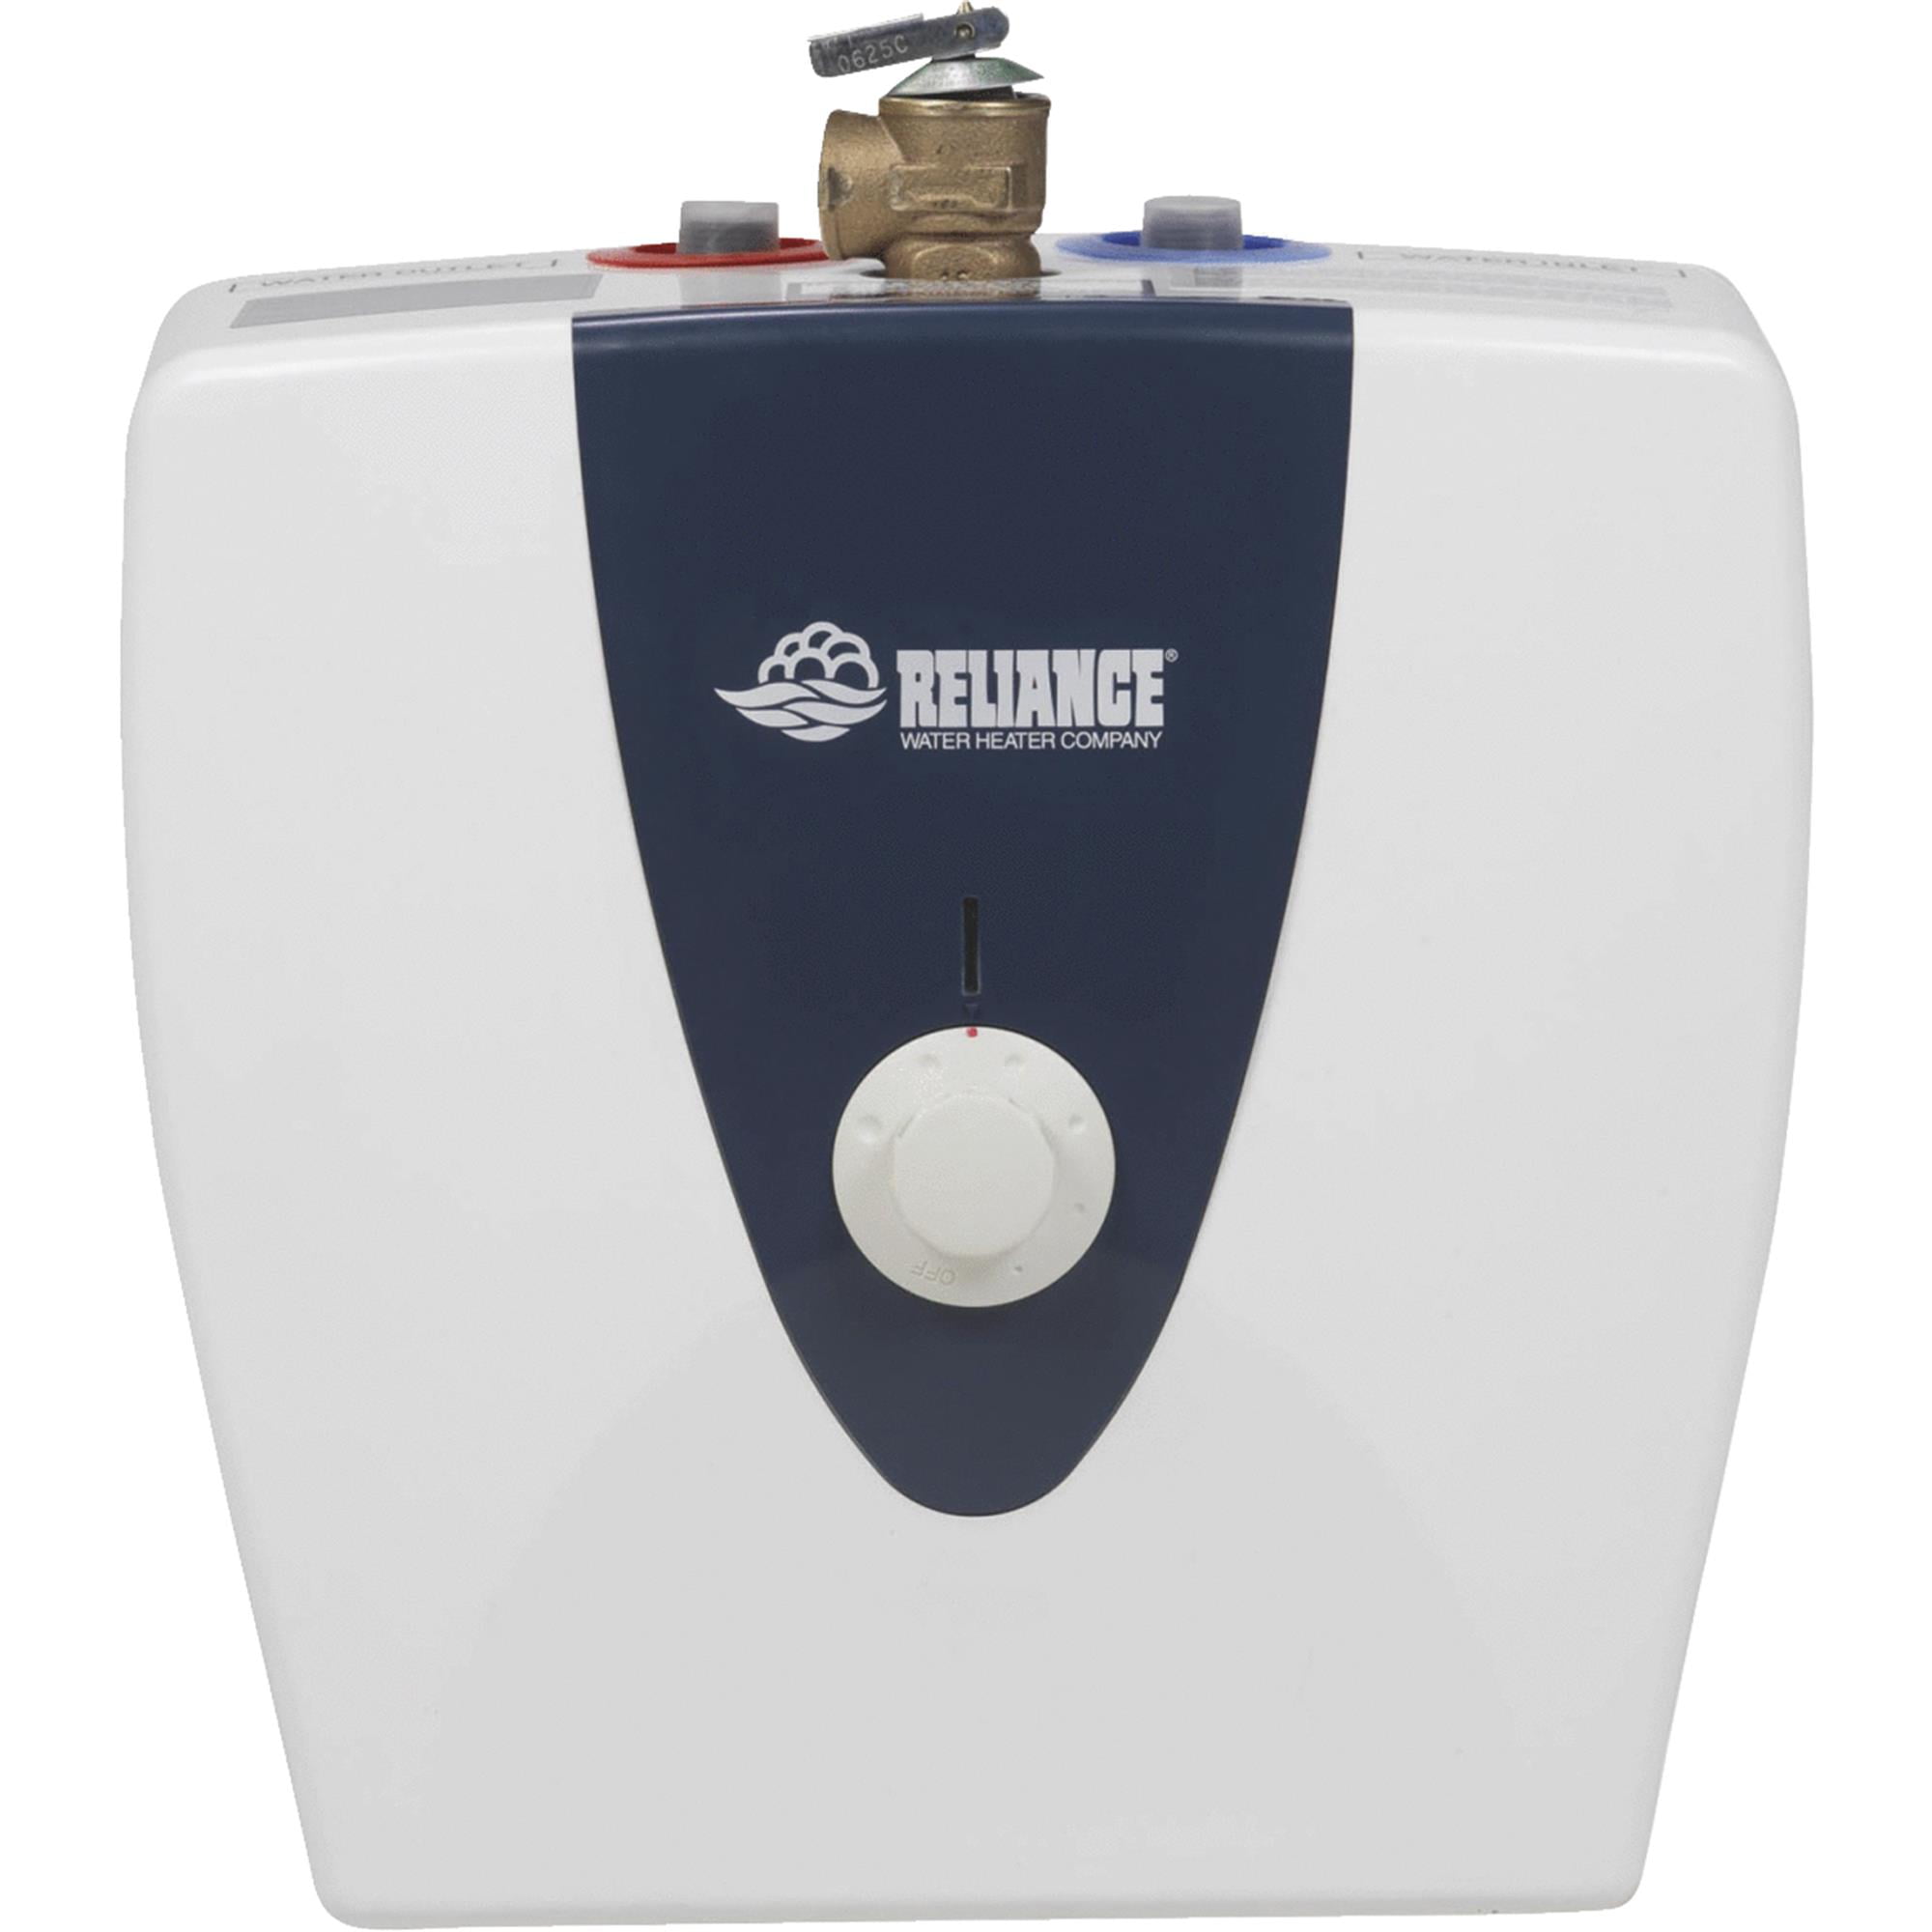 reliance-6-2-ssus-k-2-5-gallon-electric-water-heater-walmart